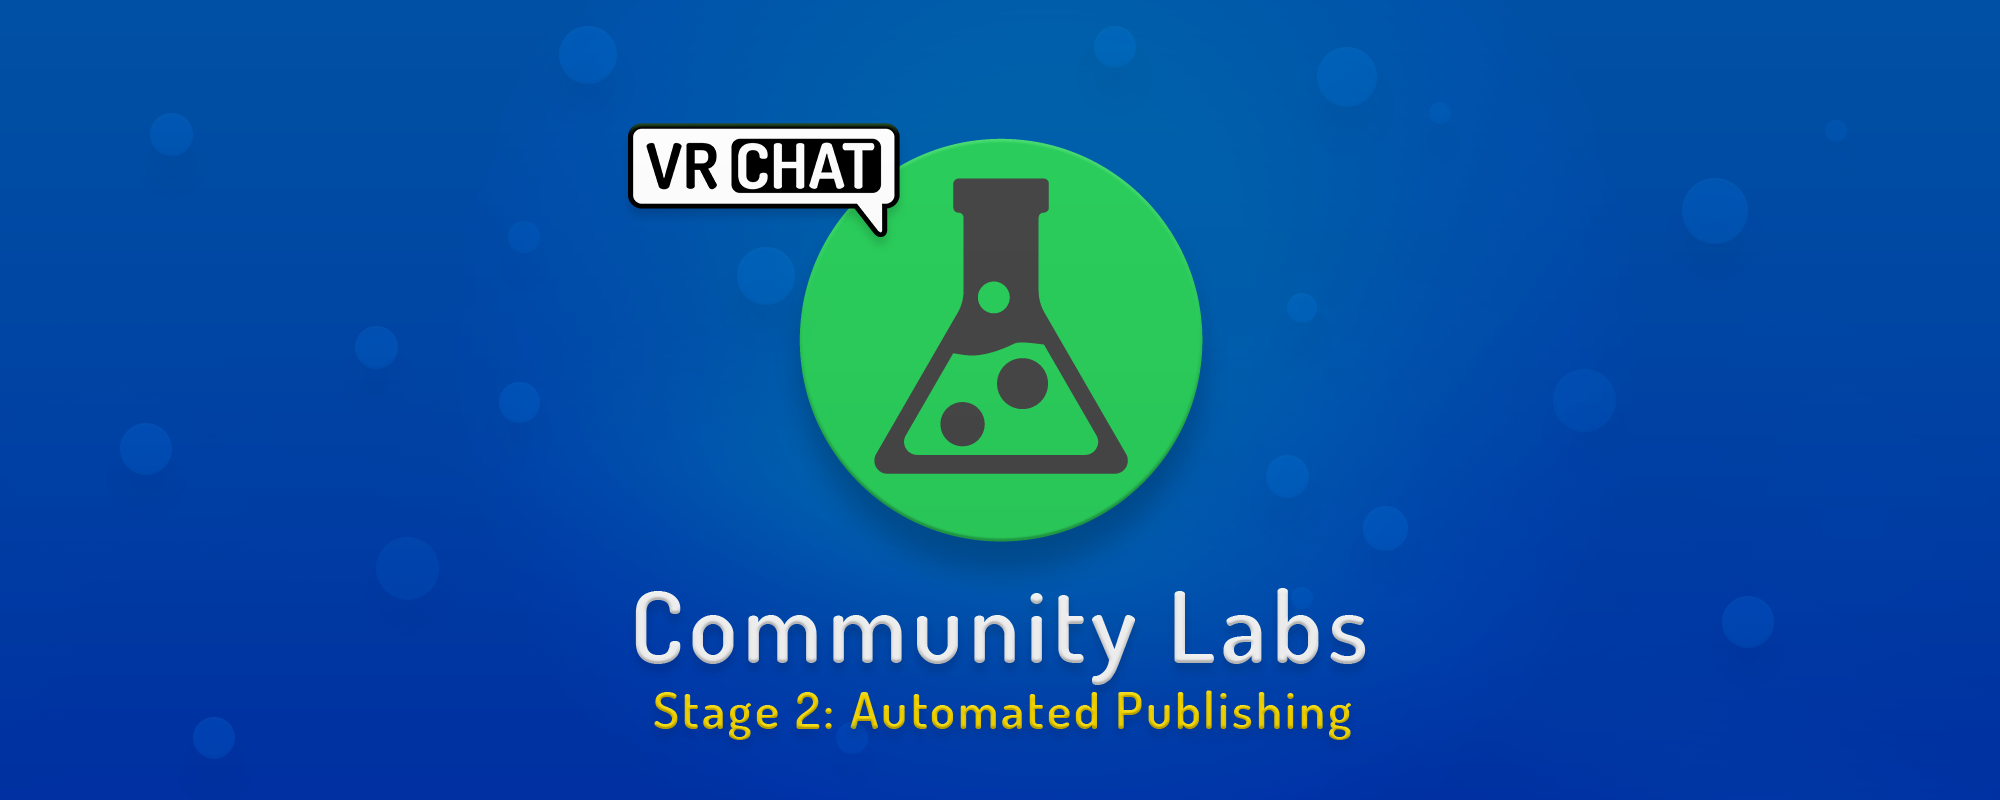 Vrchat Community Labs